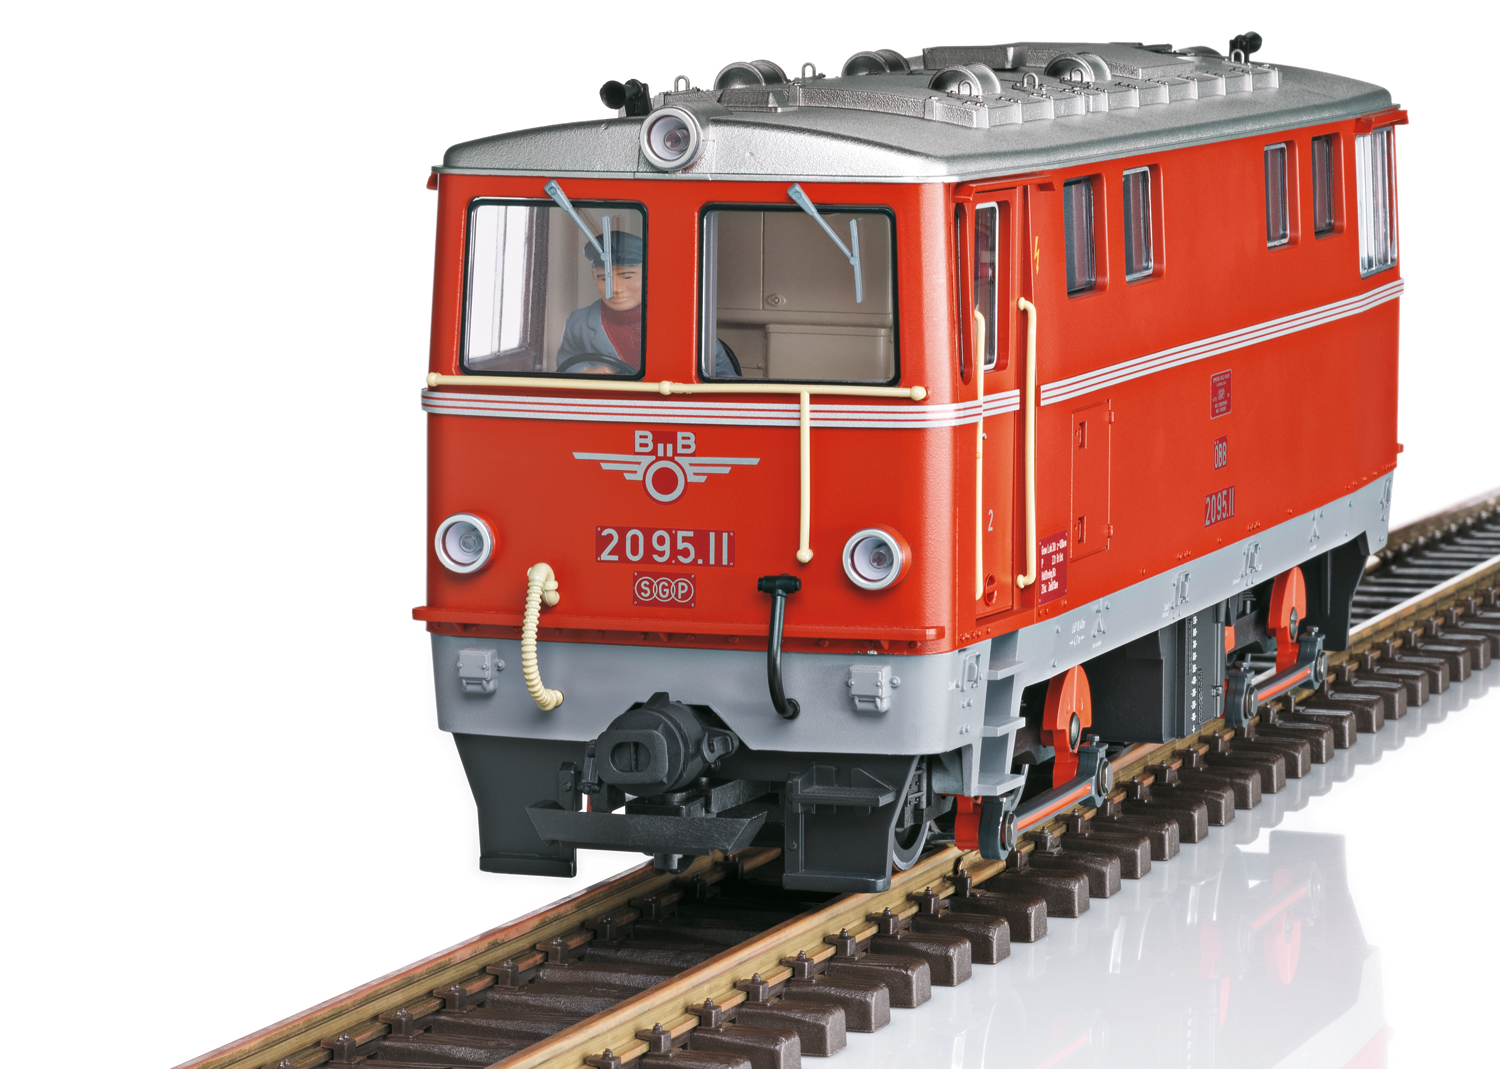 LGB Art. Nr. 22963 - Diesellokomotive Rh 2095 der BB